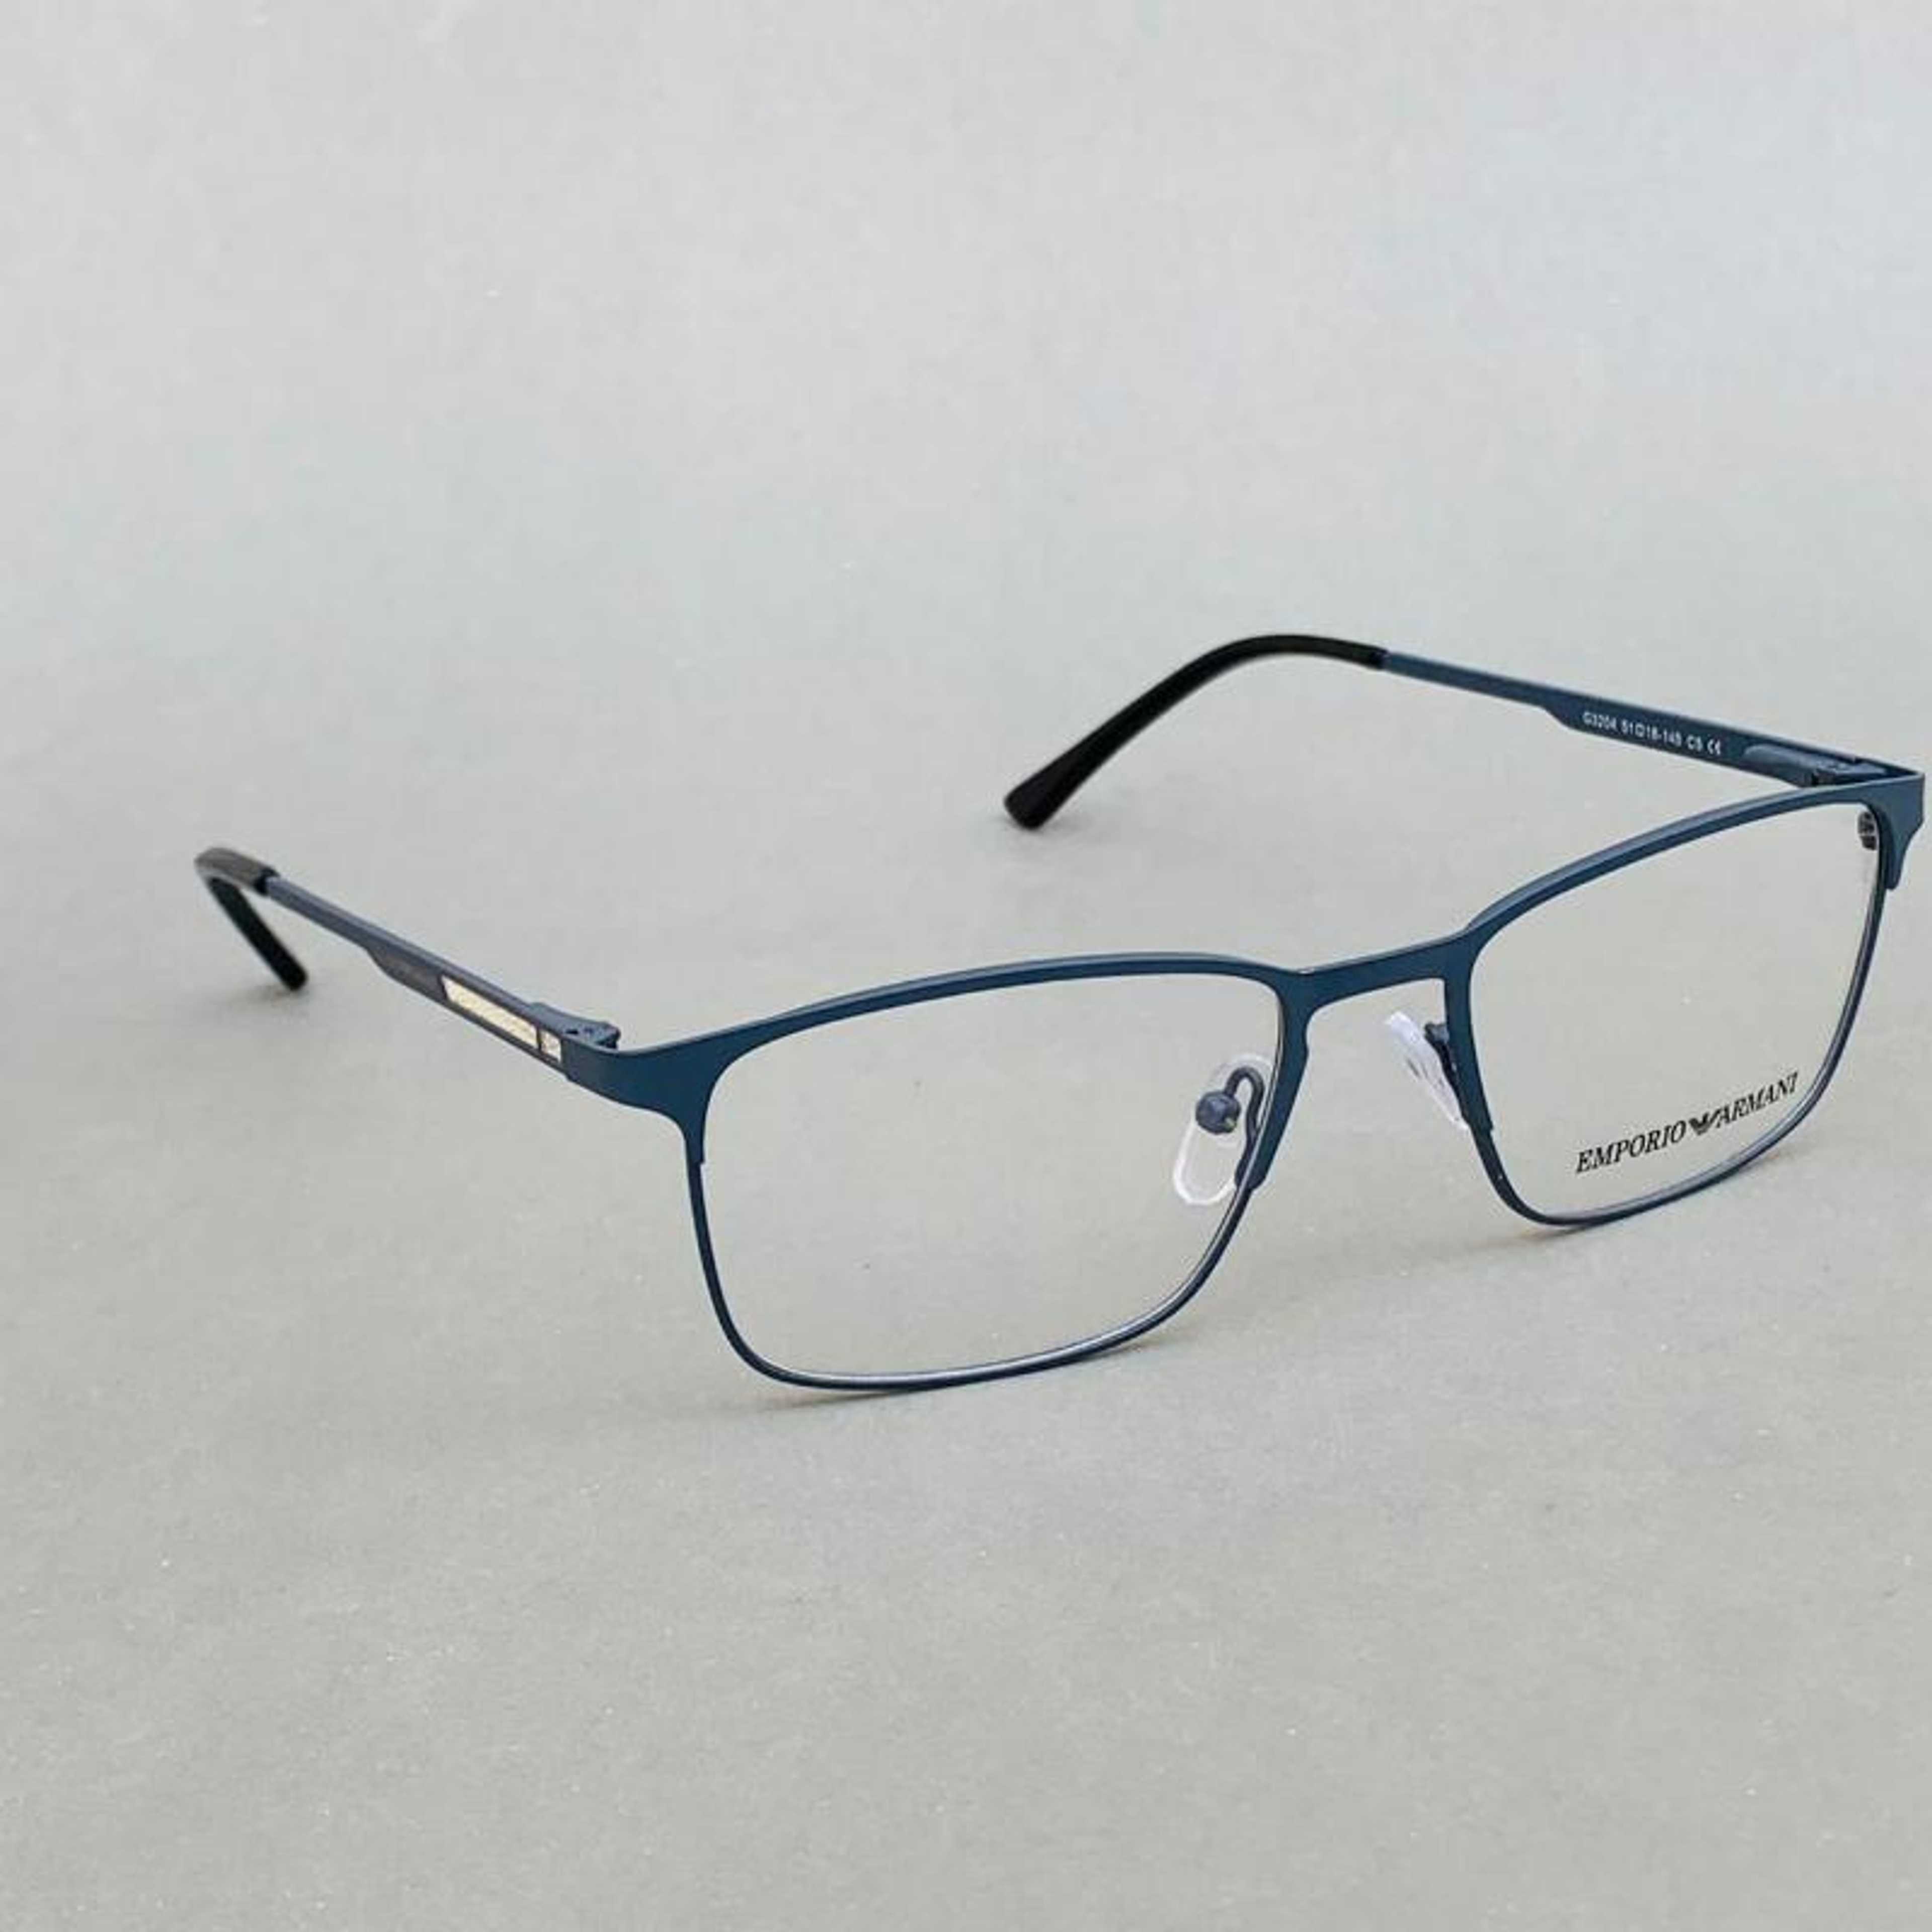 Emporio Armani Screen Protection Blue light Blocking Bluecut glasses Q-106